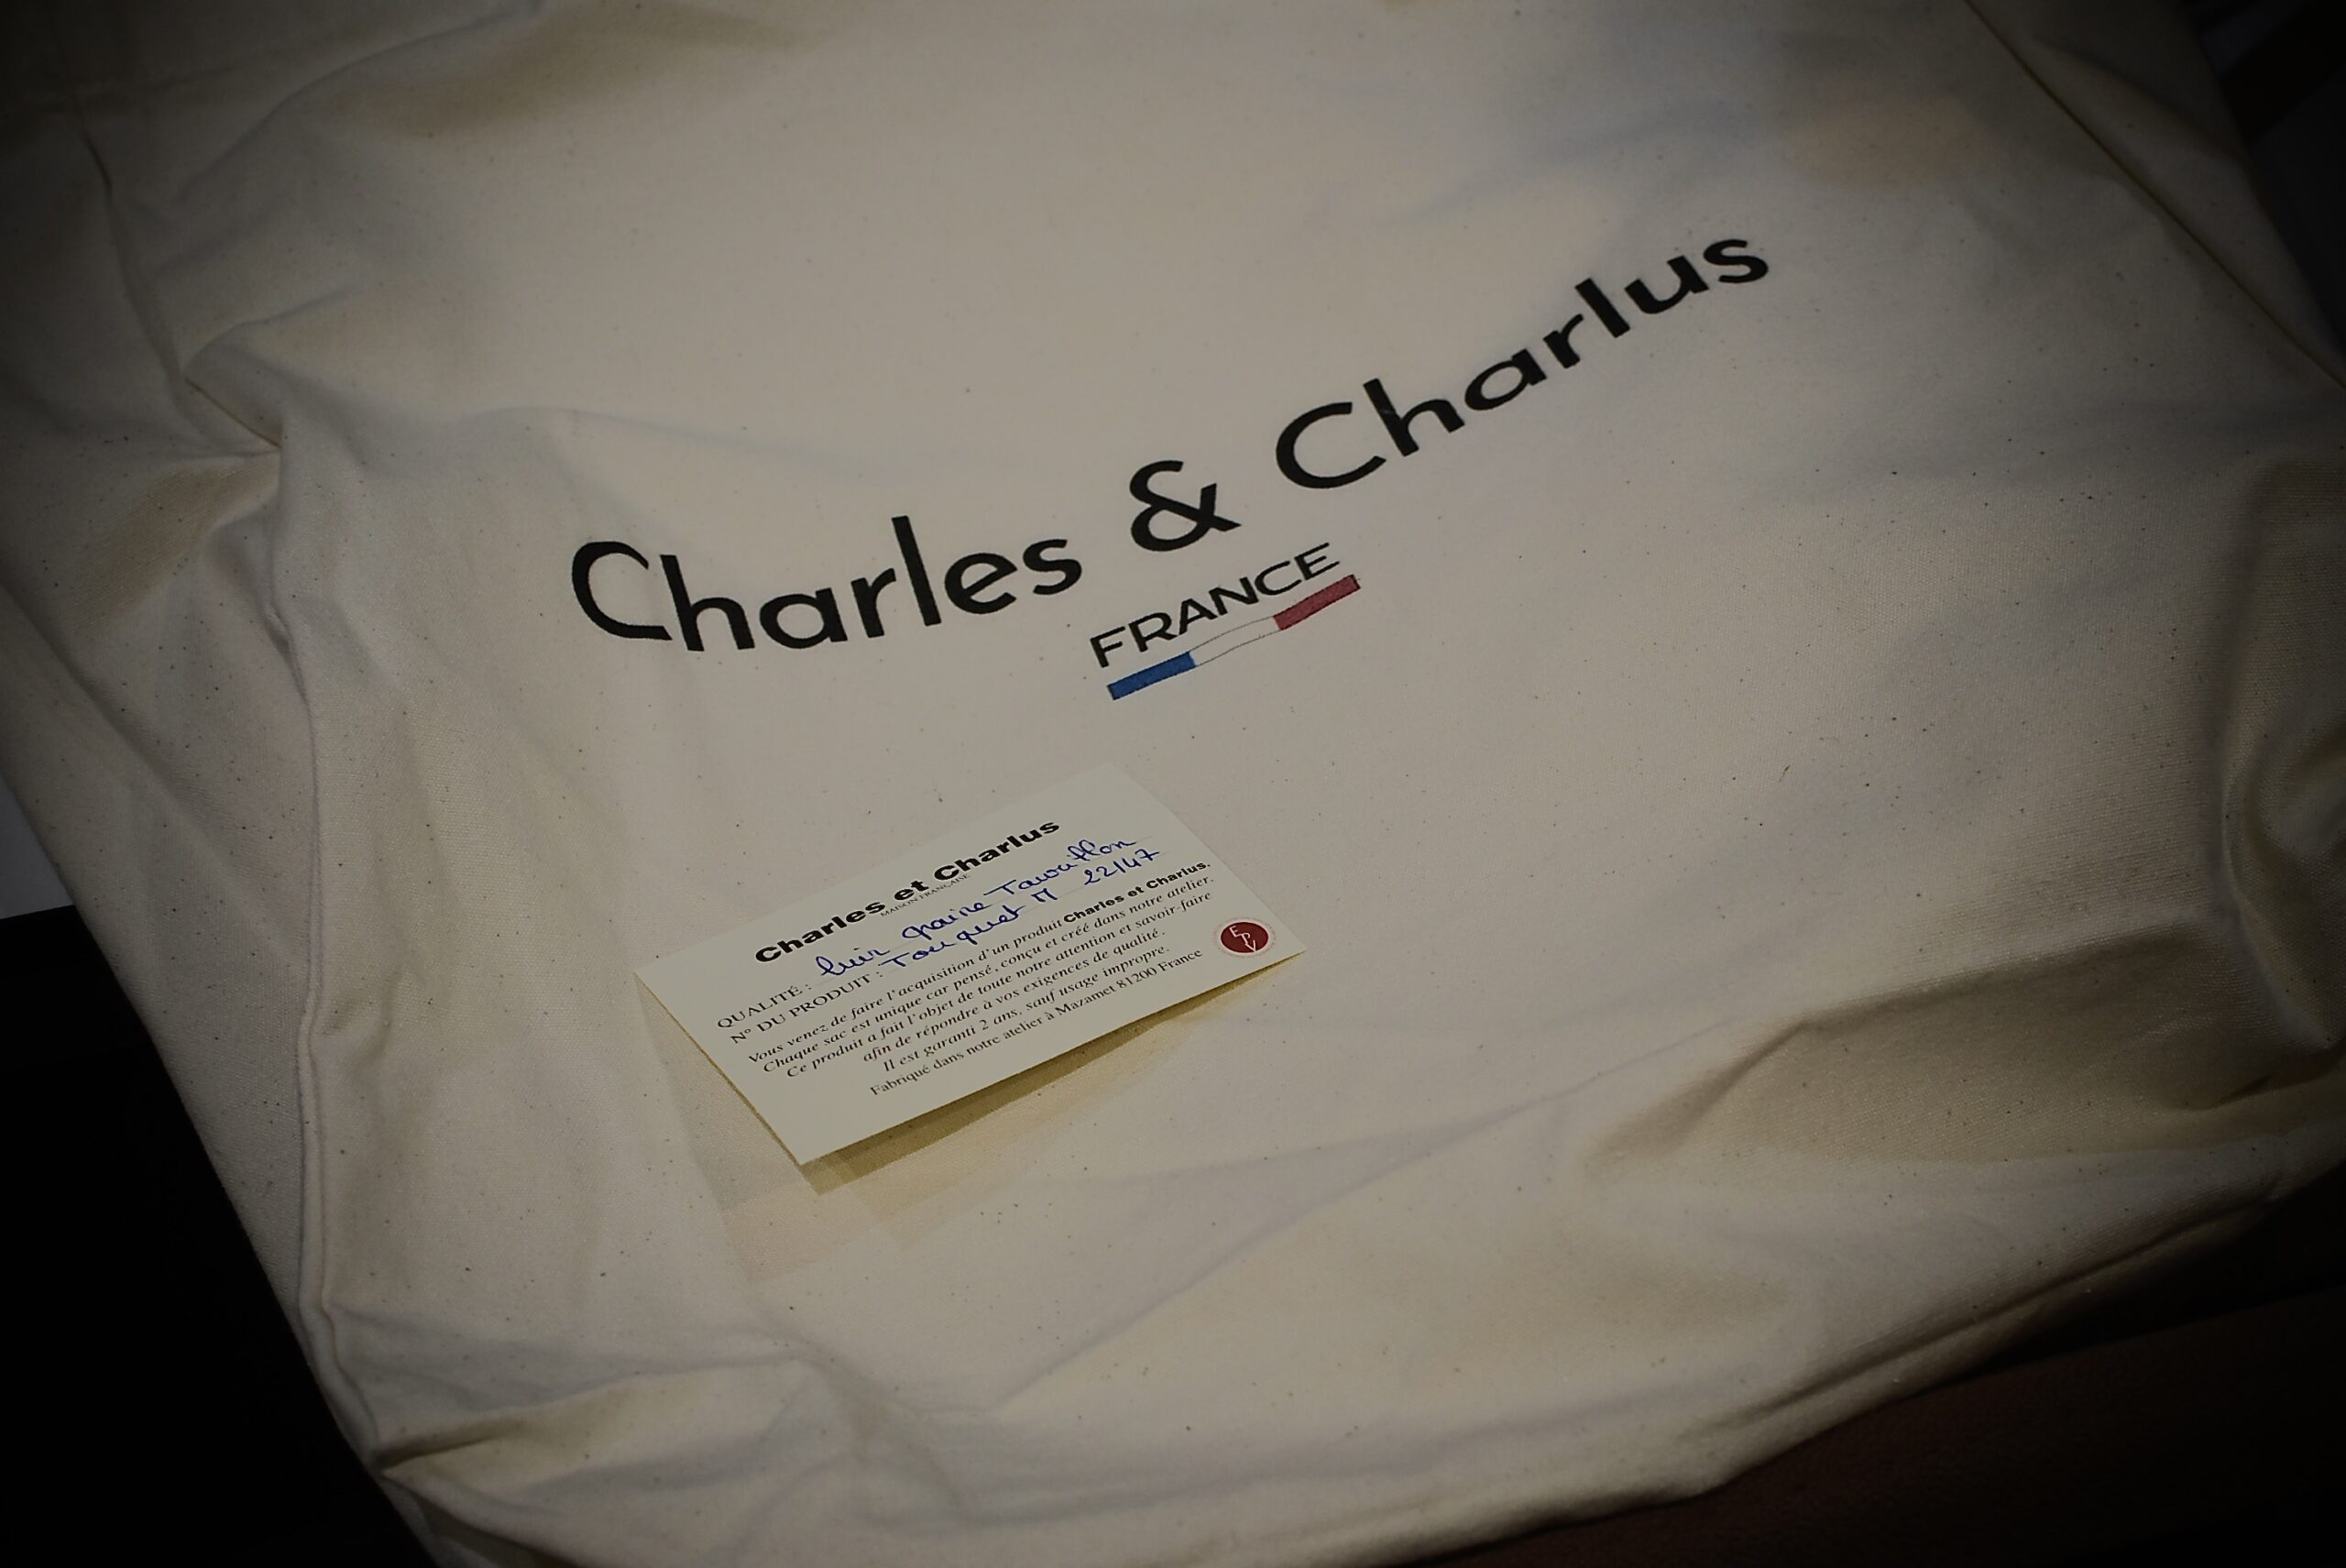 “Charles & Charlus”